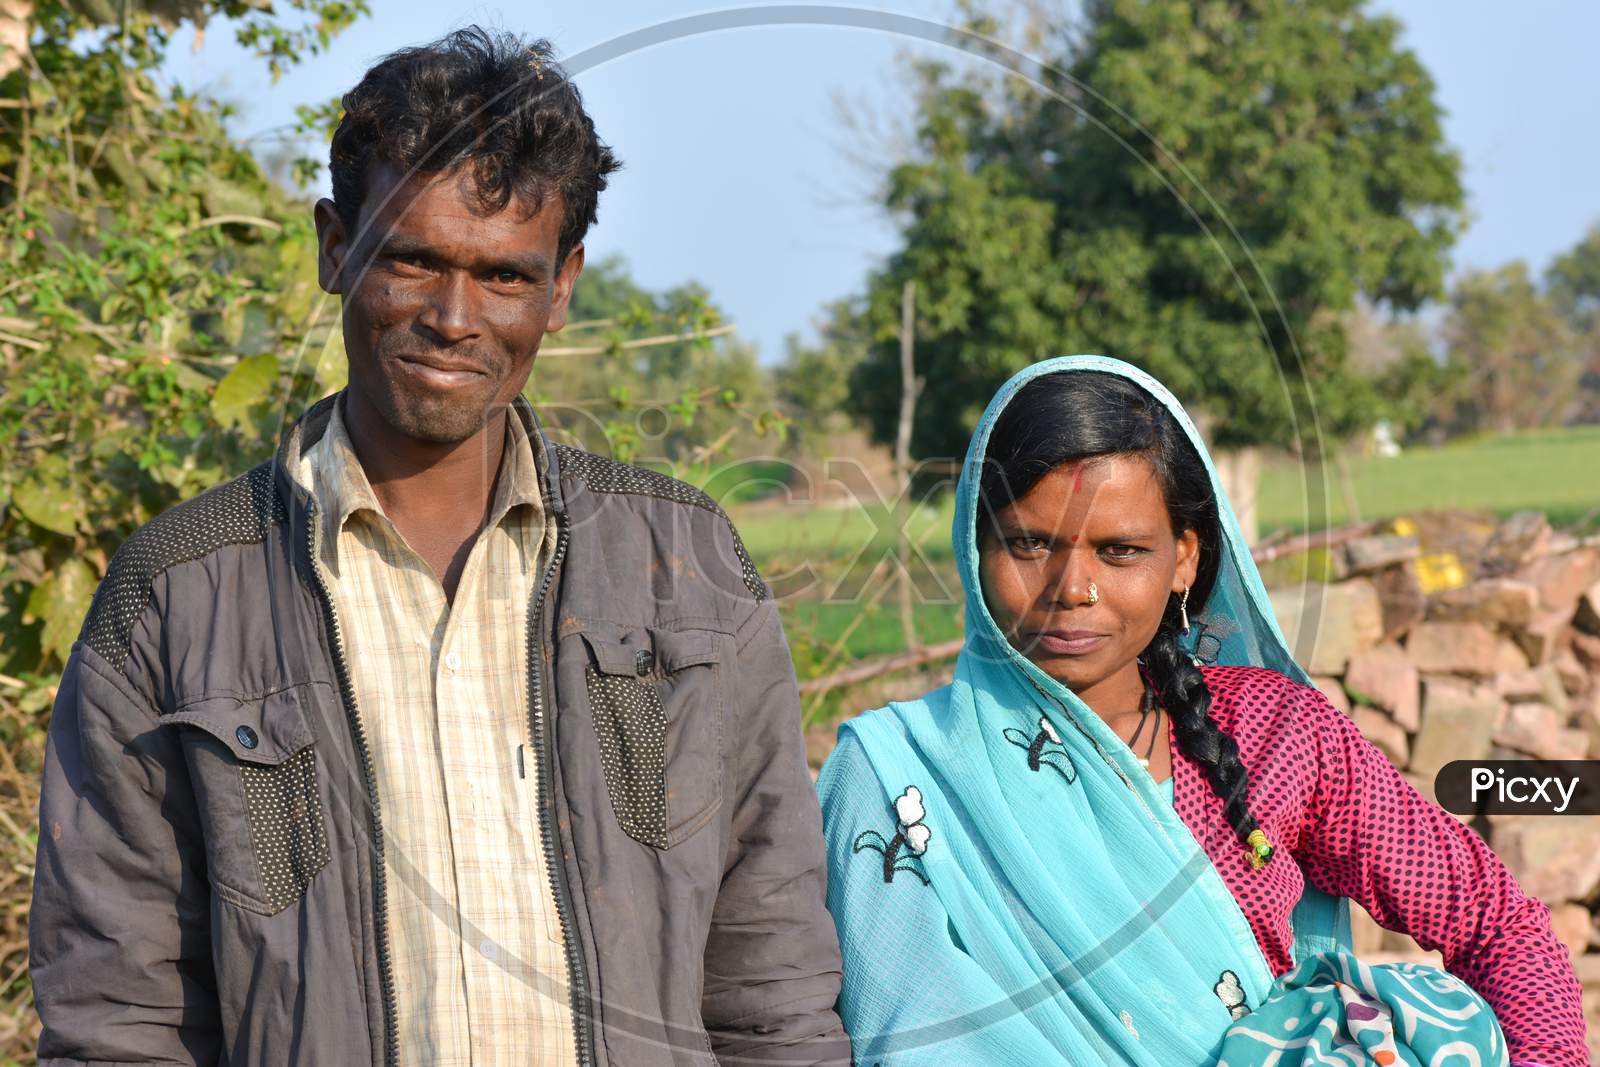 TIKAMGARH, MADHYA PRADESH, INDIA - FEBRUARY 08, 2020: Young indian village man and woman couple smiling and looking at the camera.